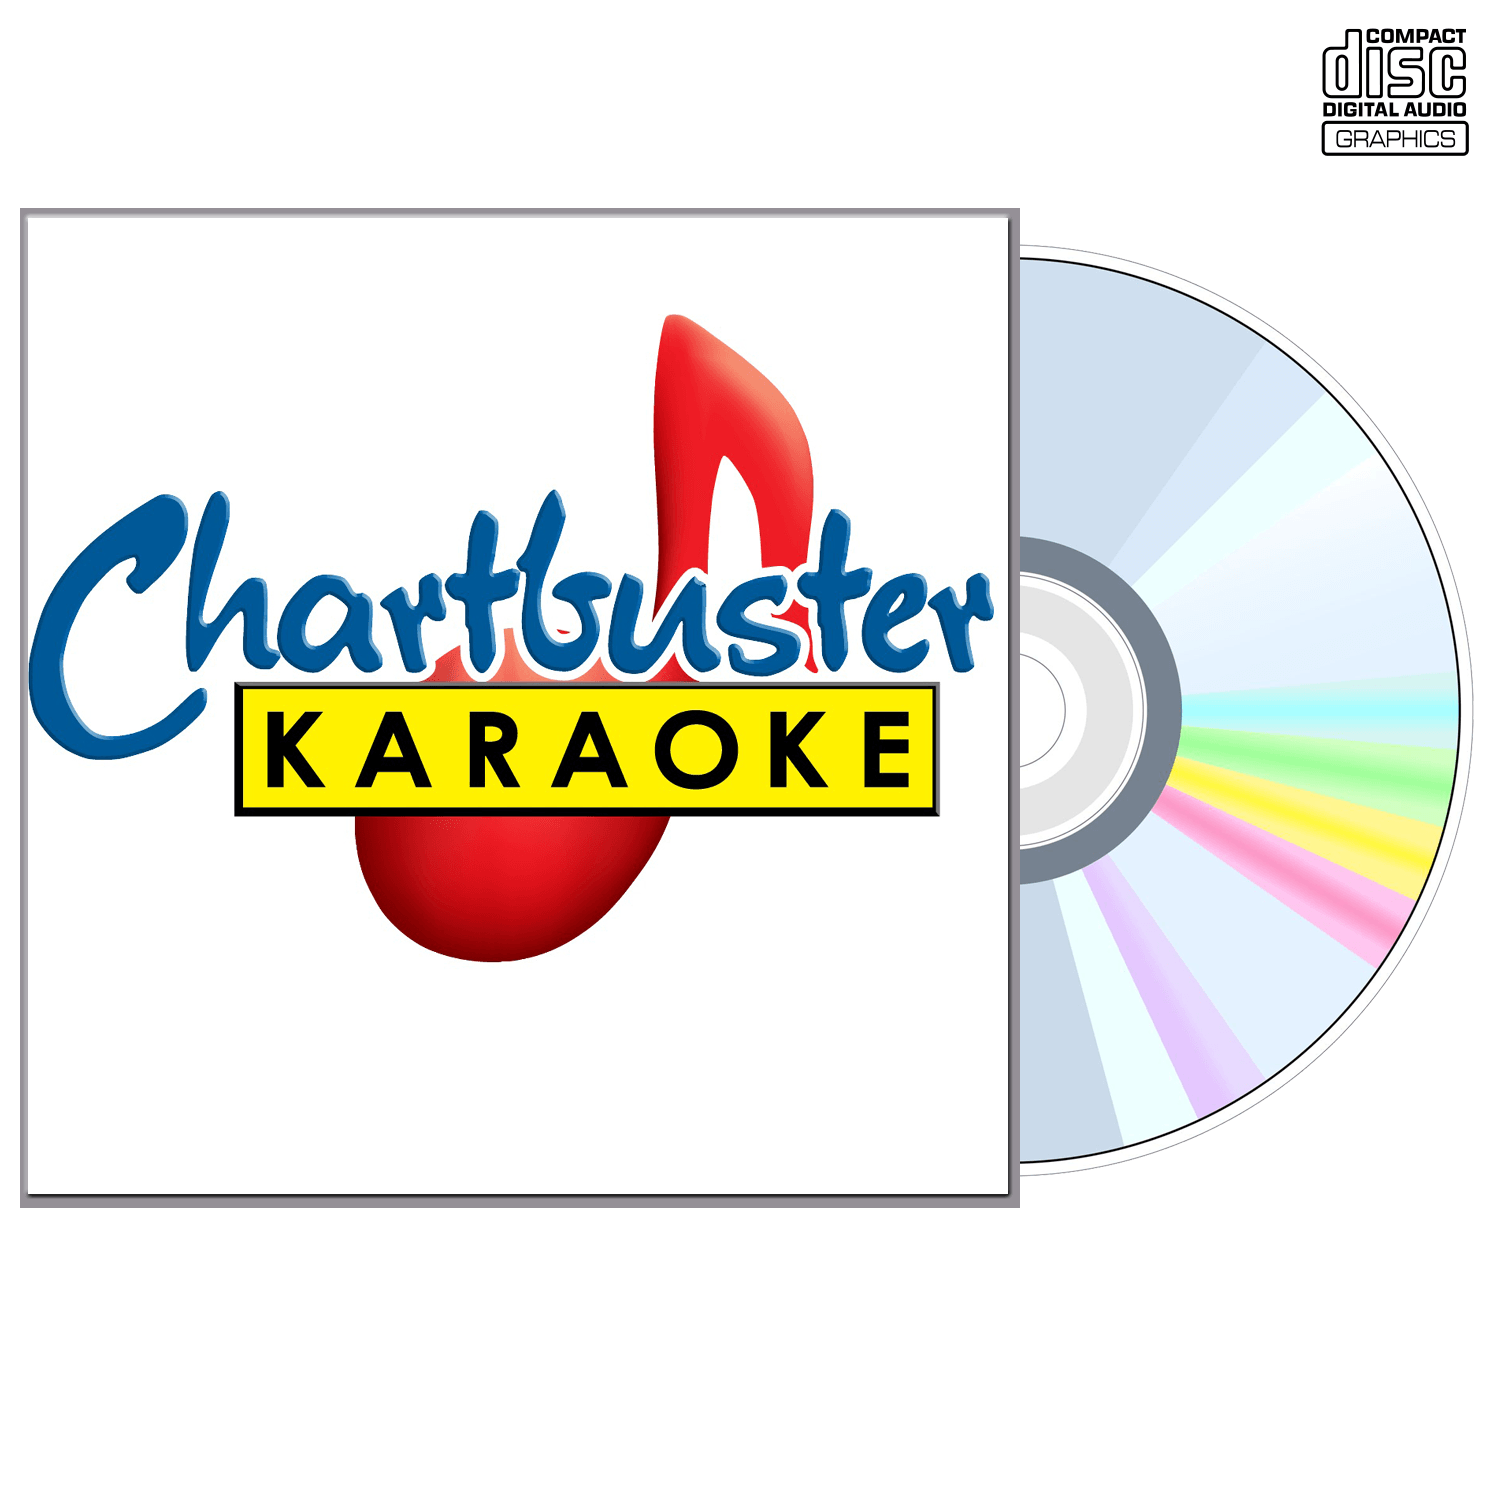 Zz Top - CD+G - Chartbuster Karaoke - Karaoke Home Entertainment